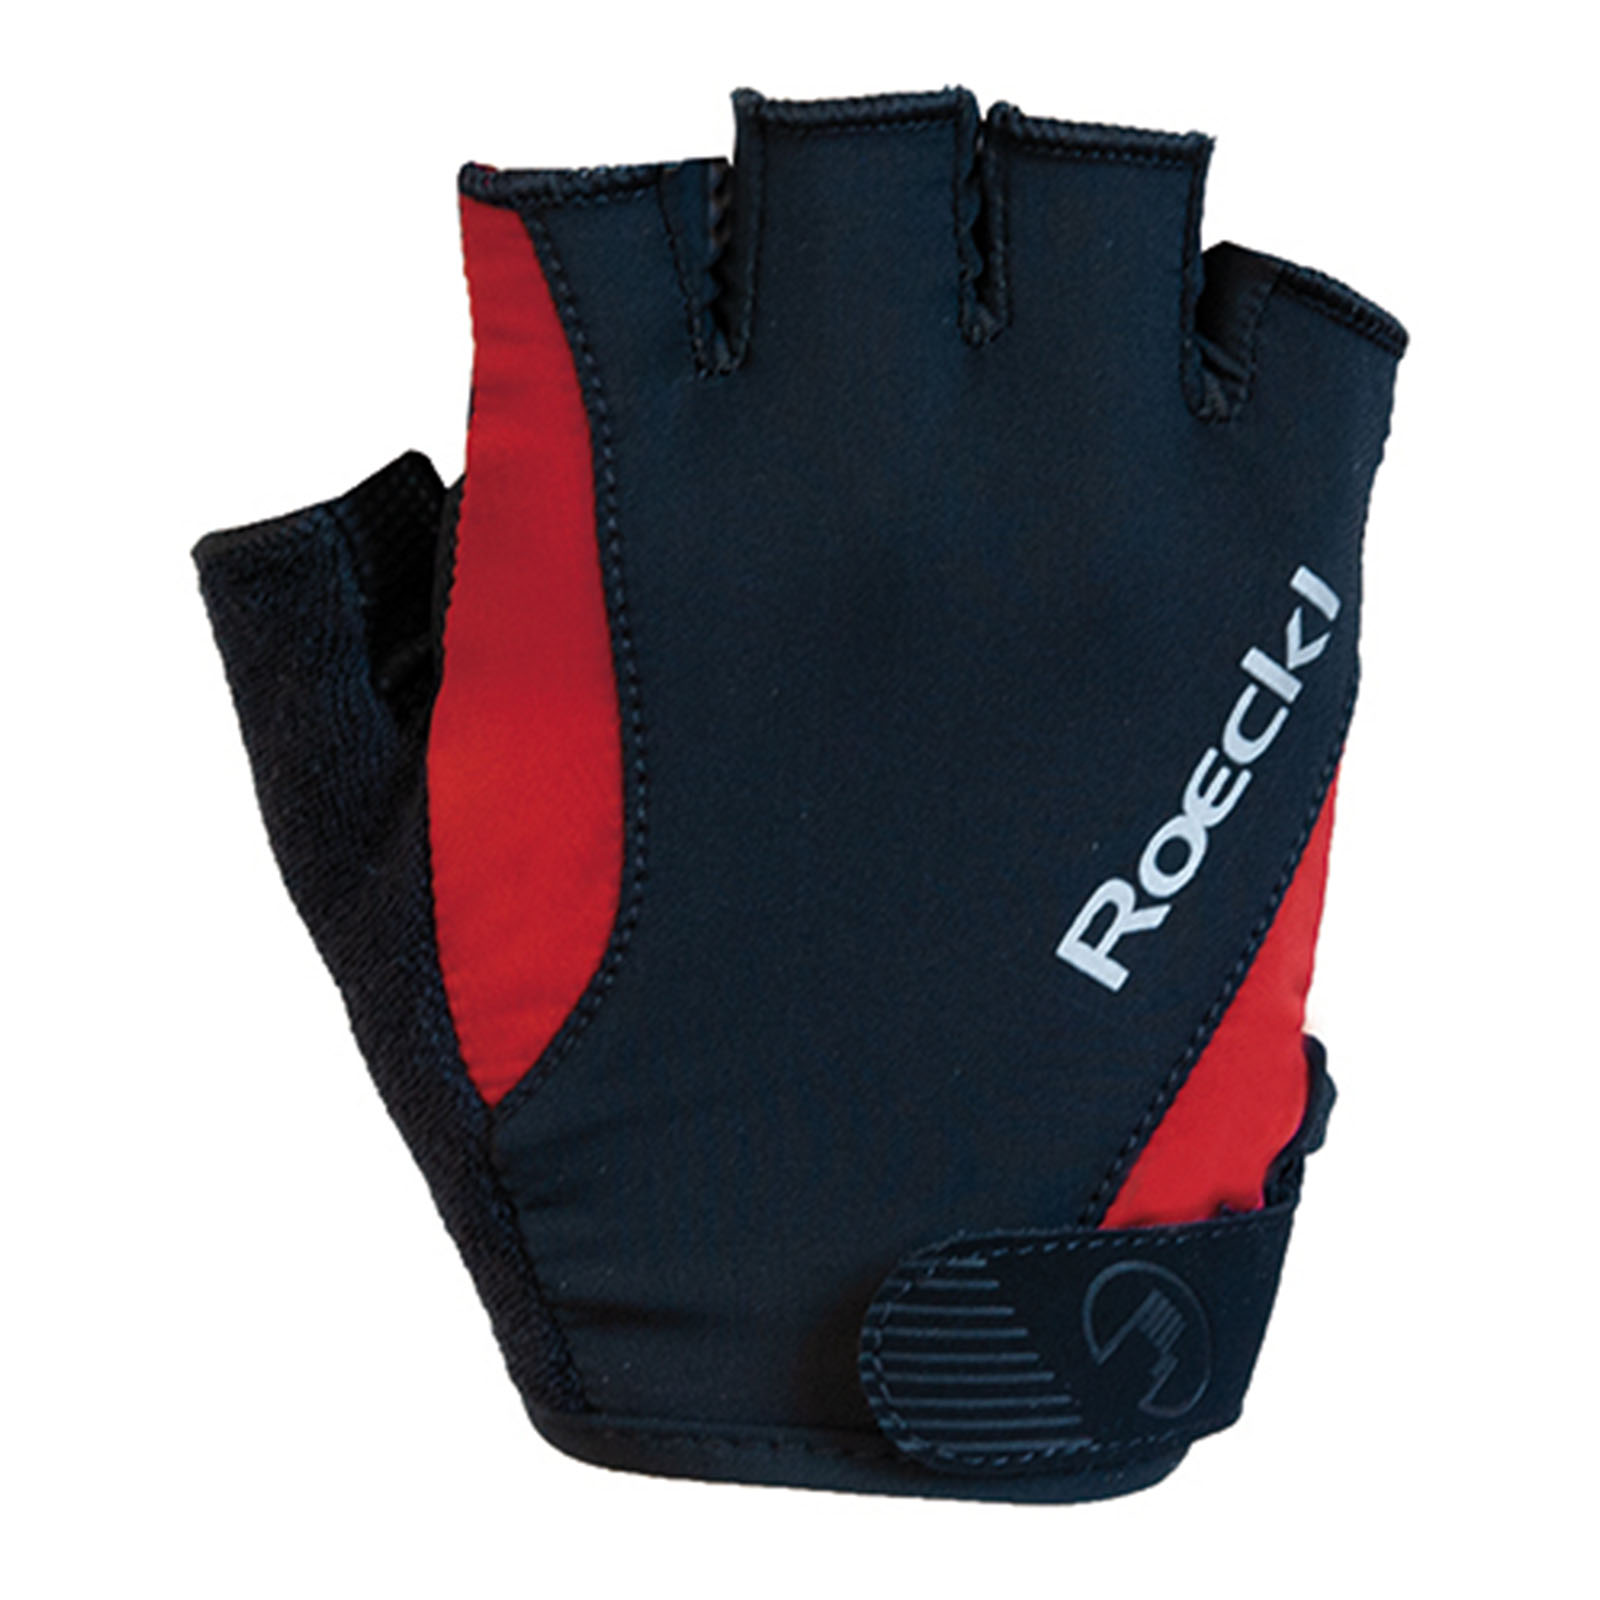 Roeckl Handschuhe Performance Basel schwarz/rot Gr. 10